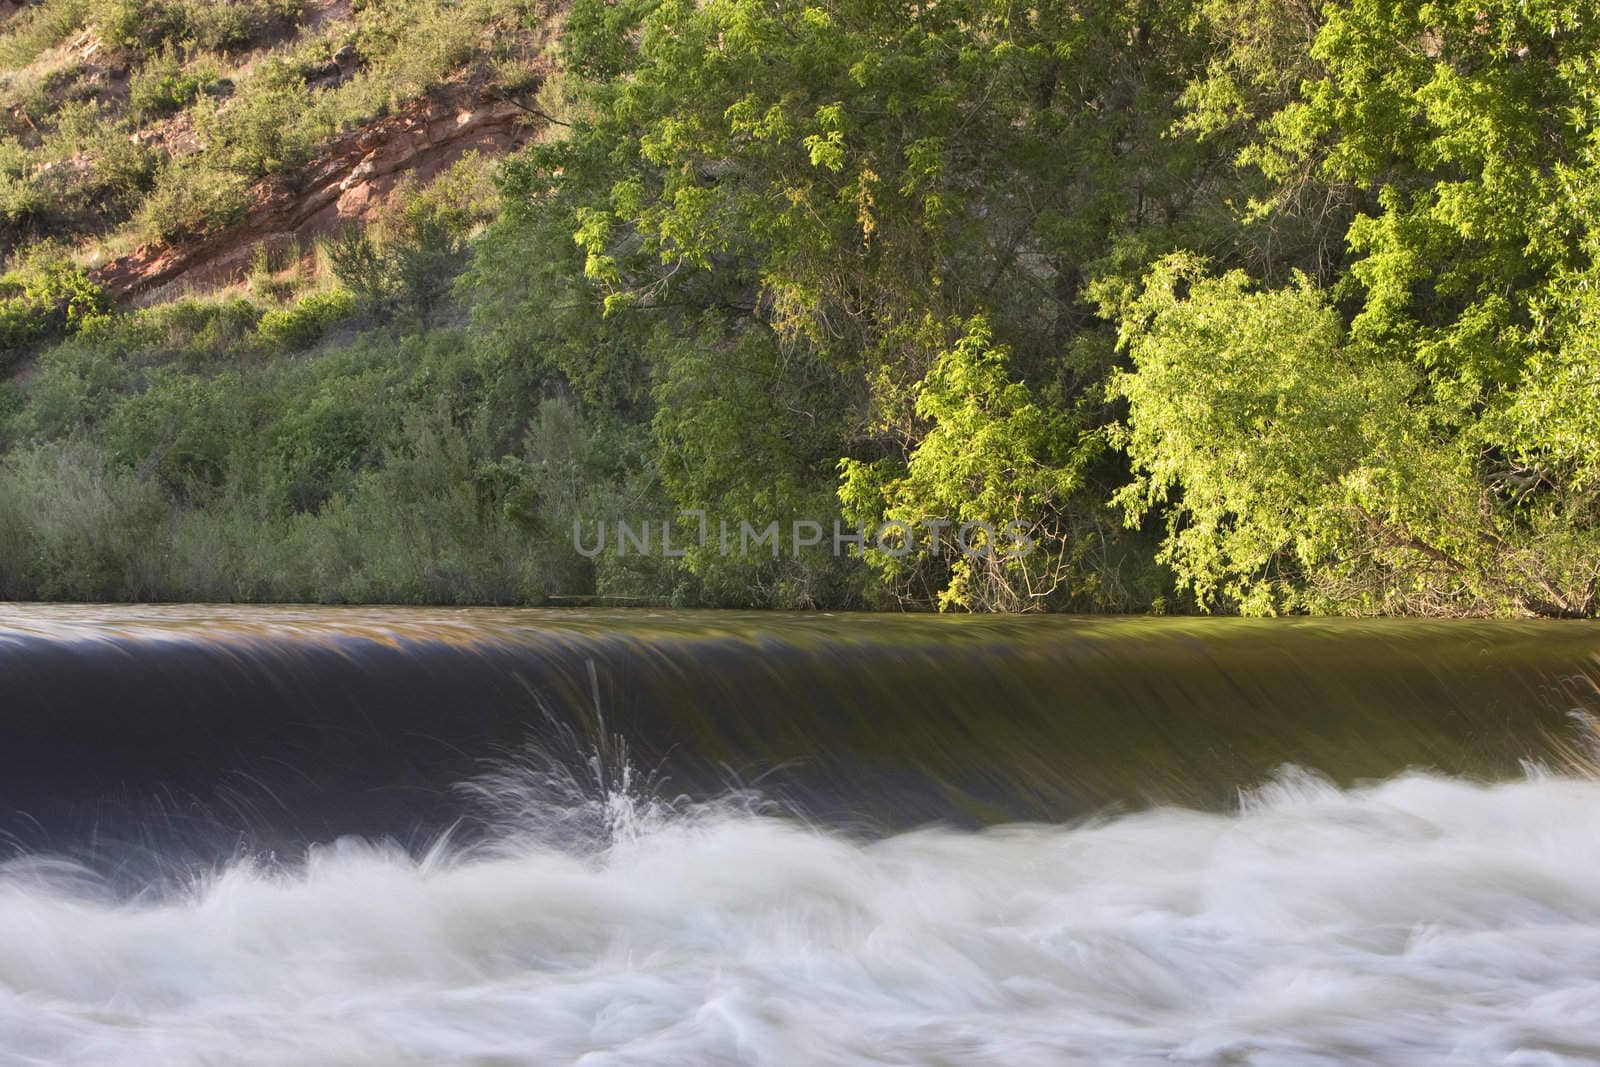 diversion dam taking water from river for farmland irrigation; Cache la Poudre River near Fort Collins, Colorado